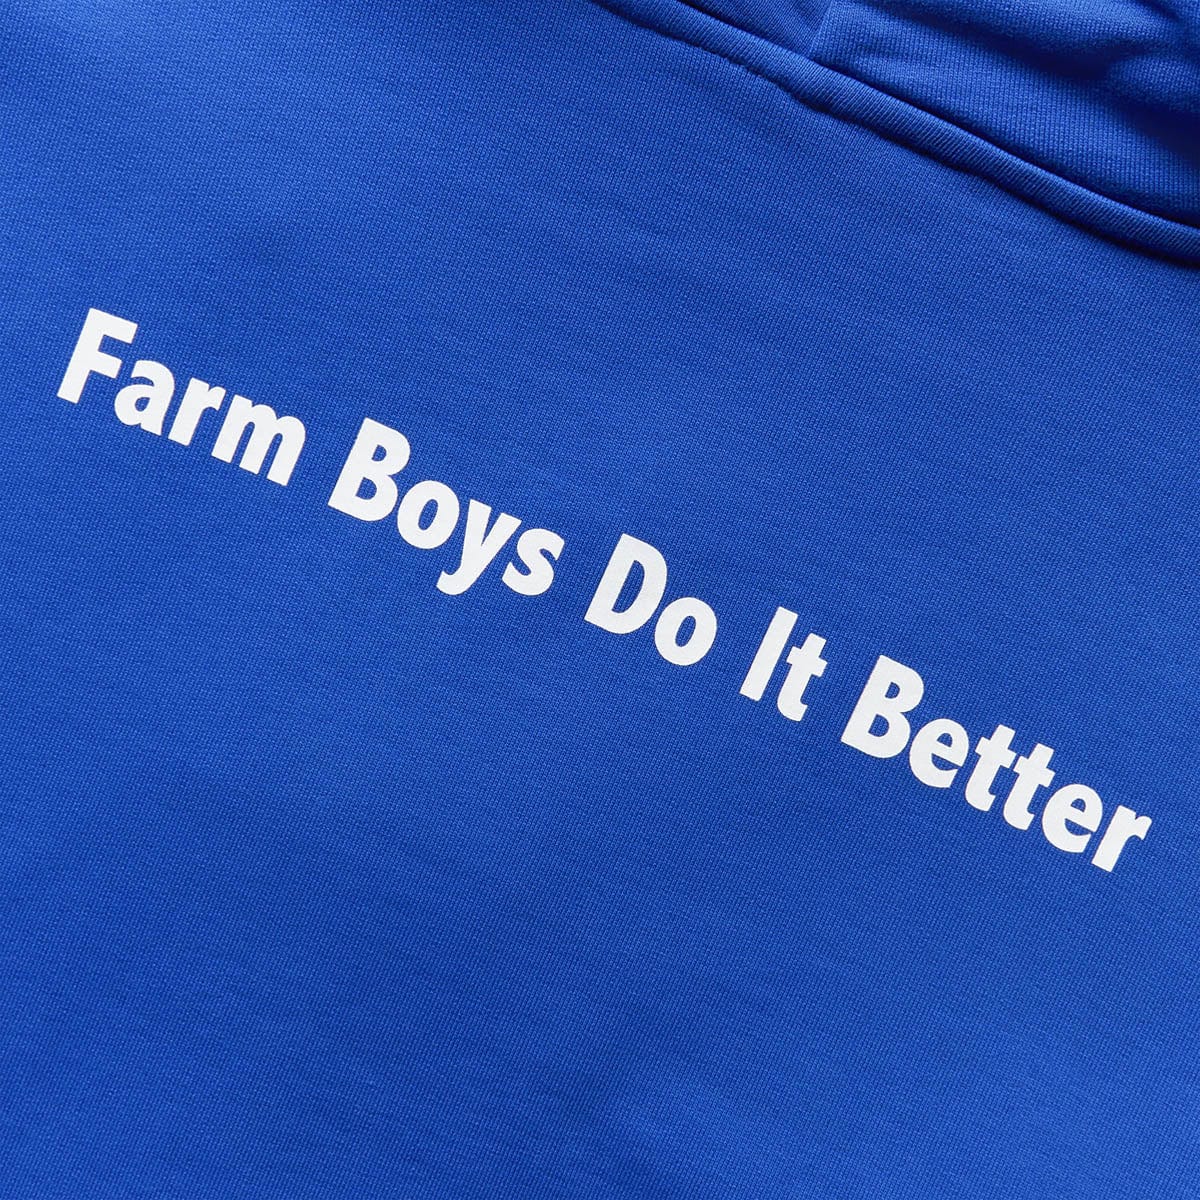 Sky High Farm Workwear Hoodies & Sweatshirts LEMONS FARM HOODIE